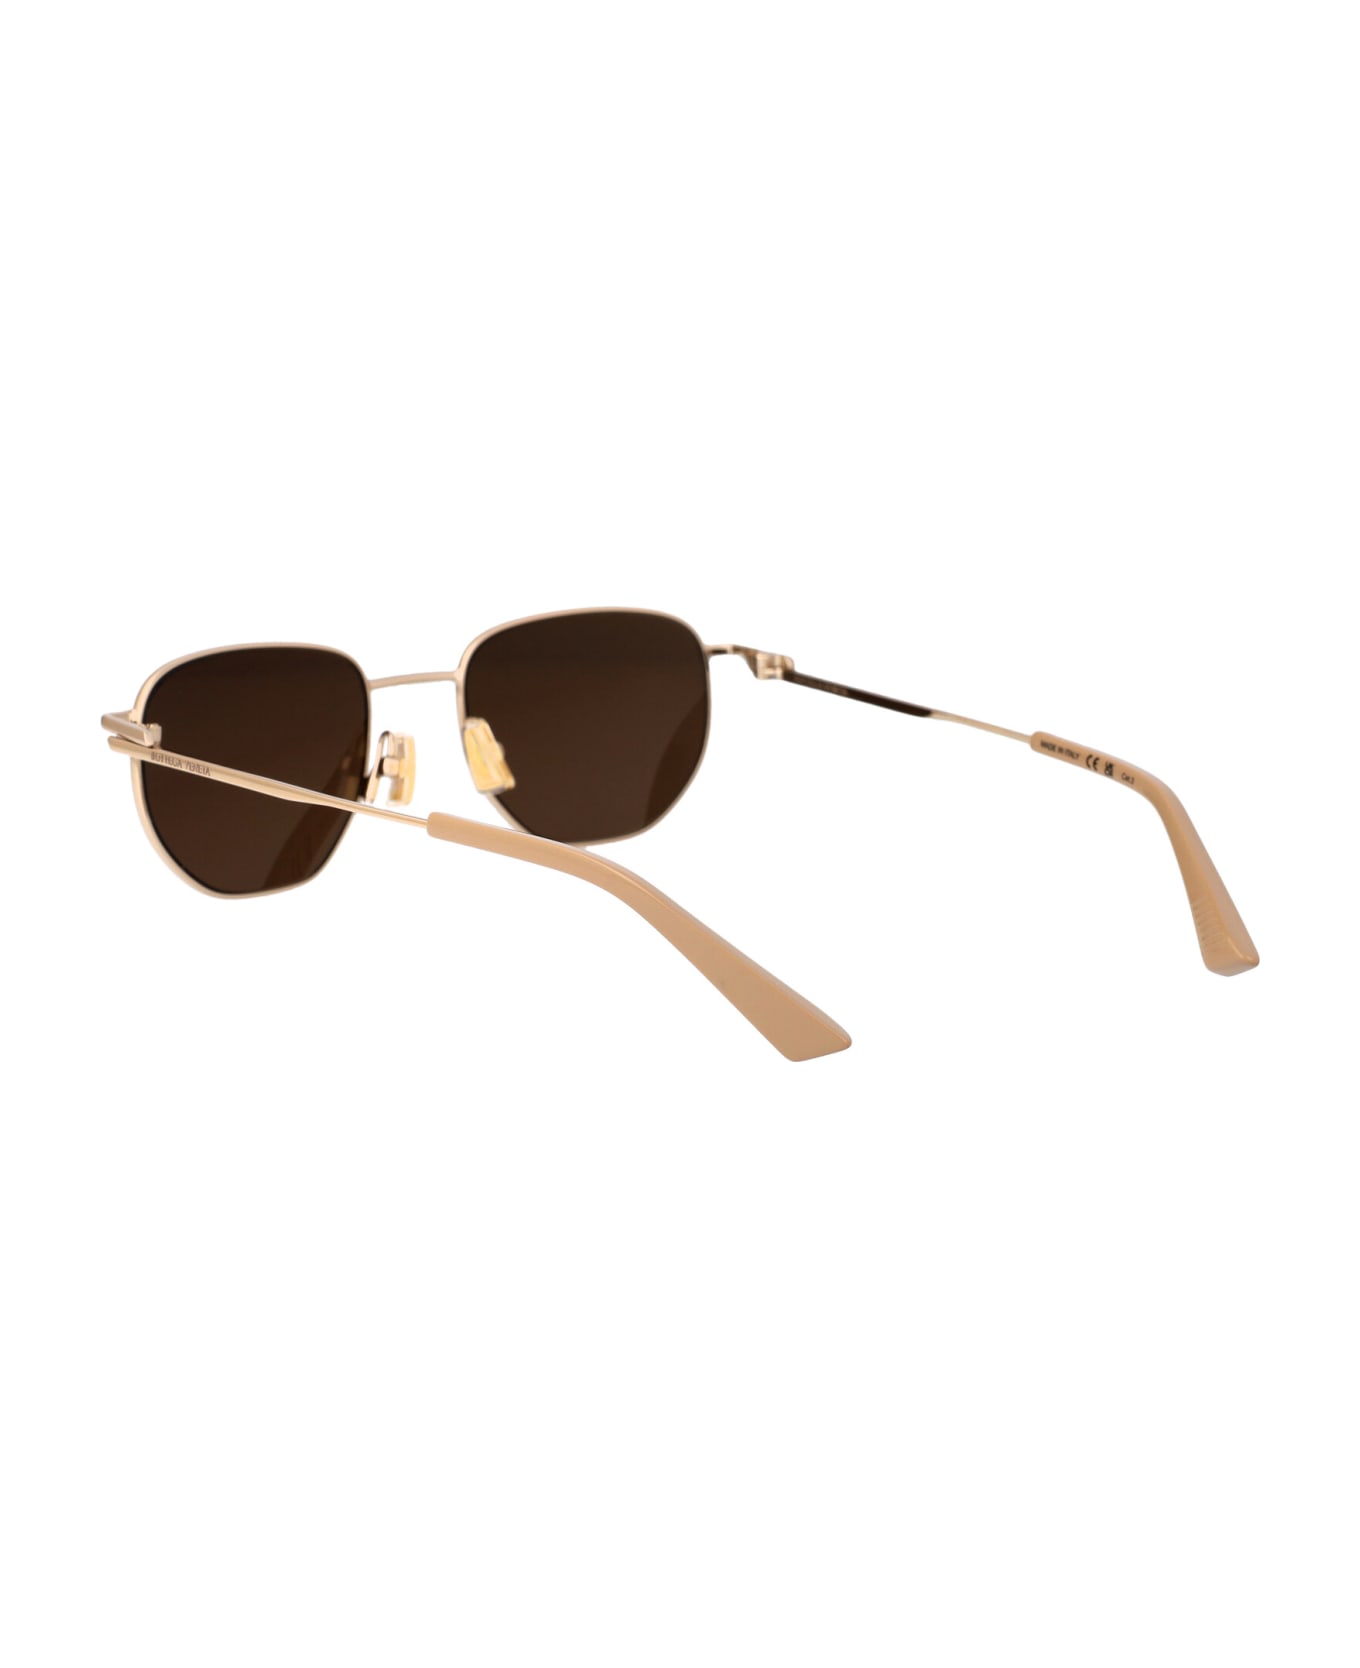 Bottega Veneta Eyewear Bv1301s Sunglasses - 002 GOLD GOLD BROWN